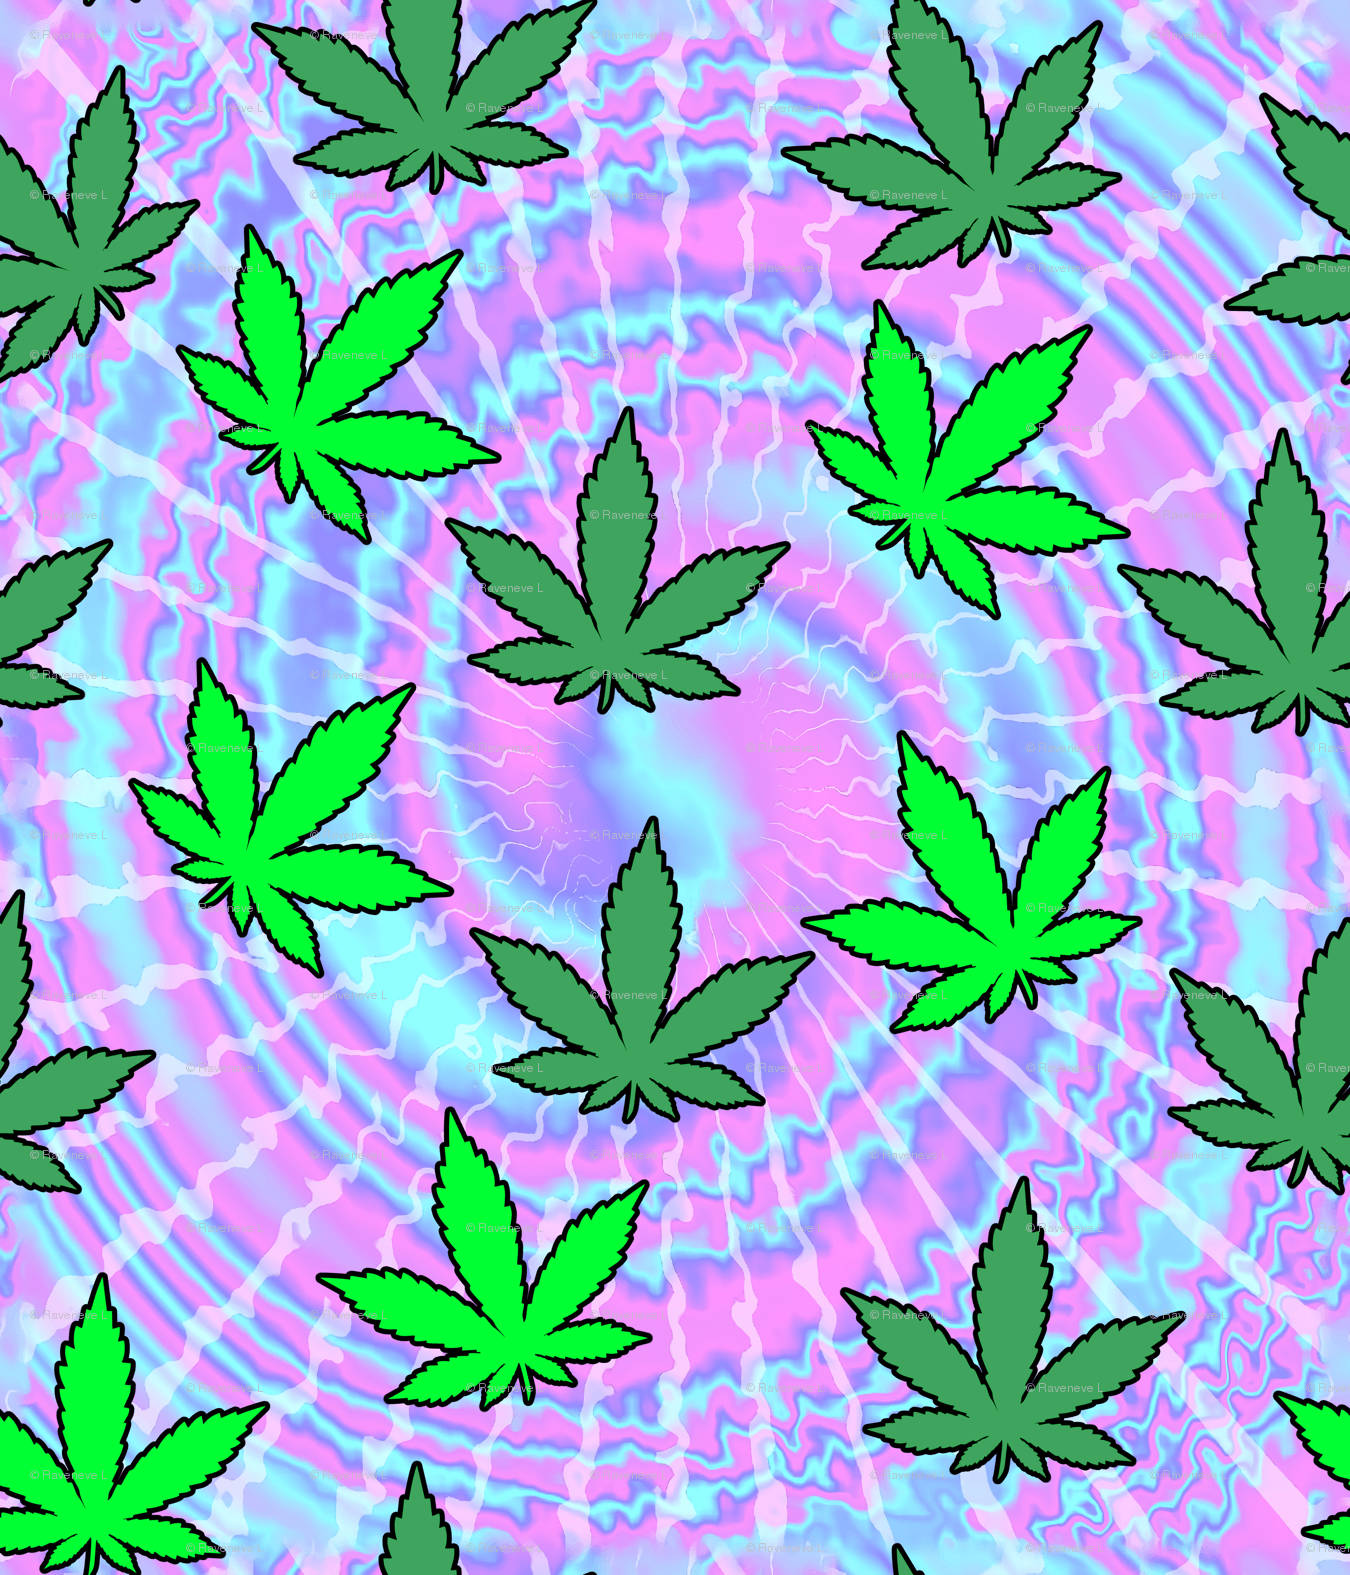 Weed blade mønster på tie-dye baggrund. Wallpaper